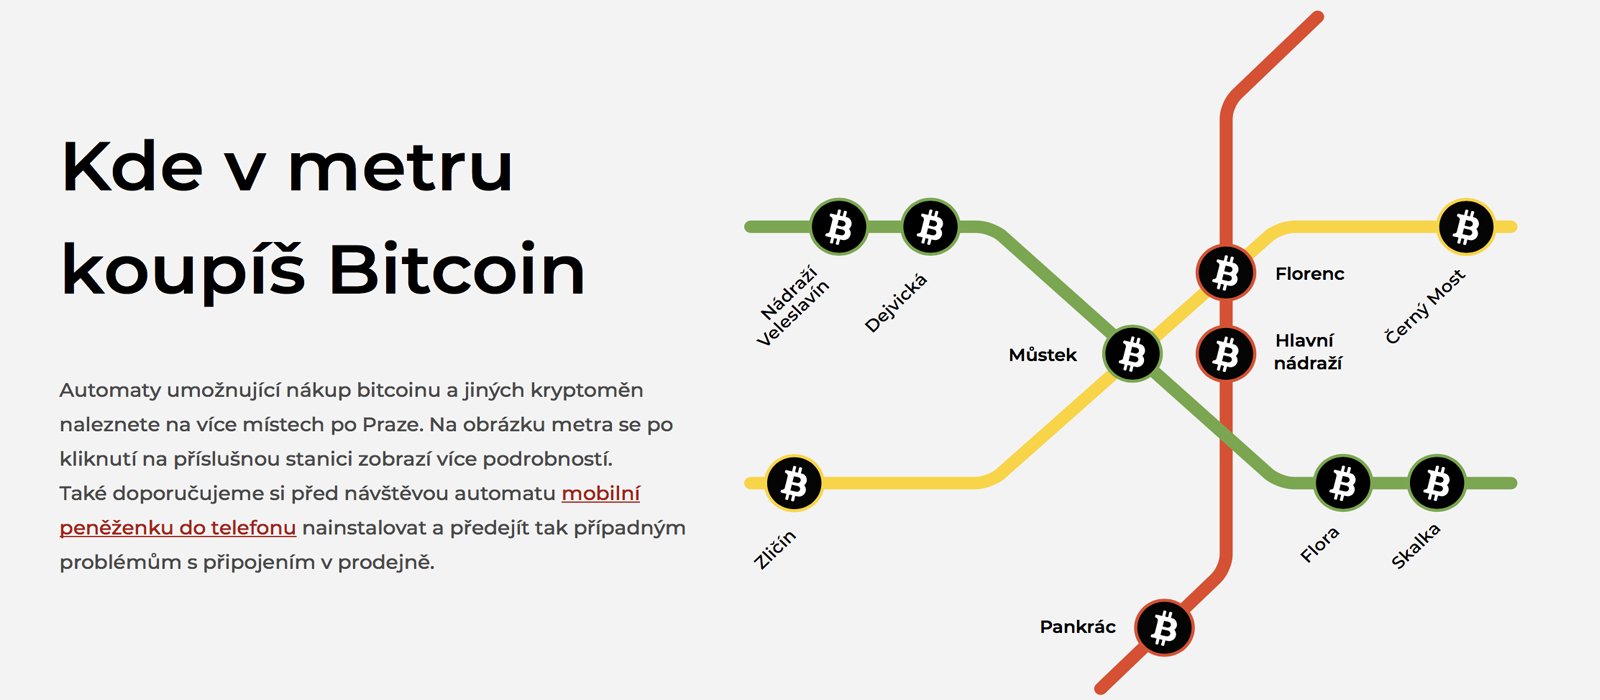 Prague Subway System Now Has Ten New Bitcoin ATMs 